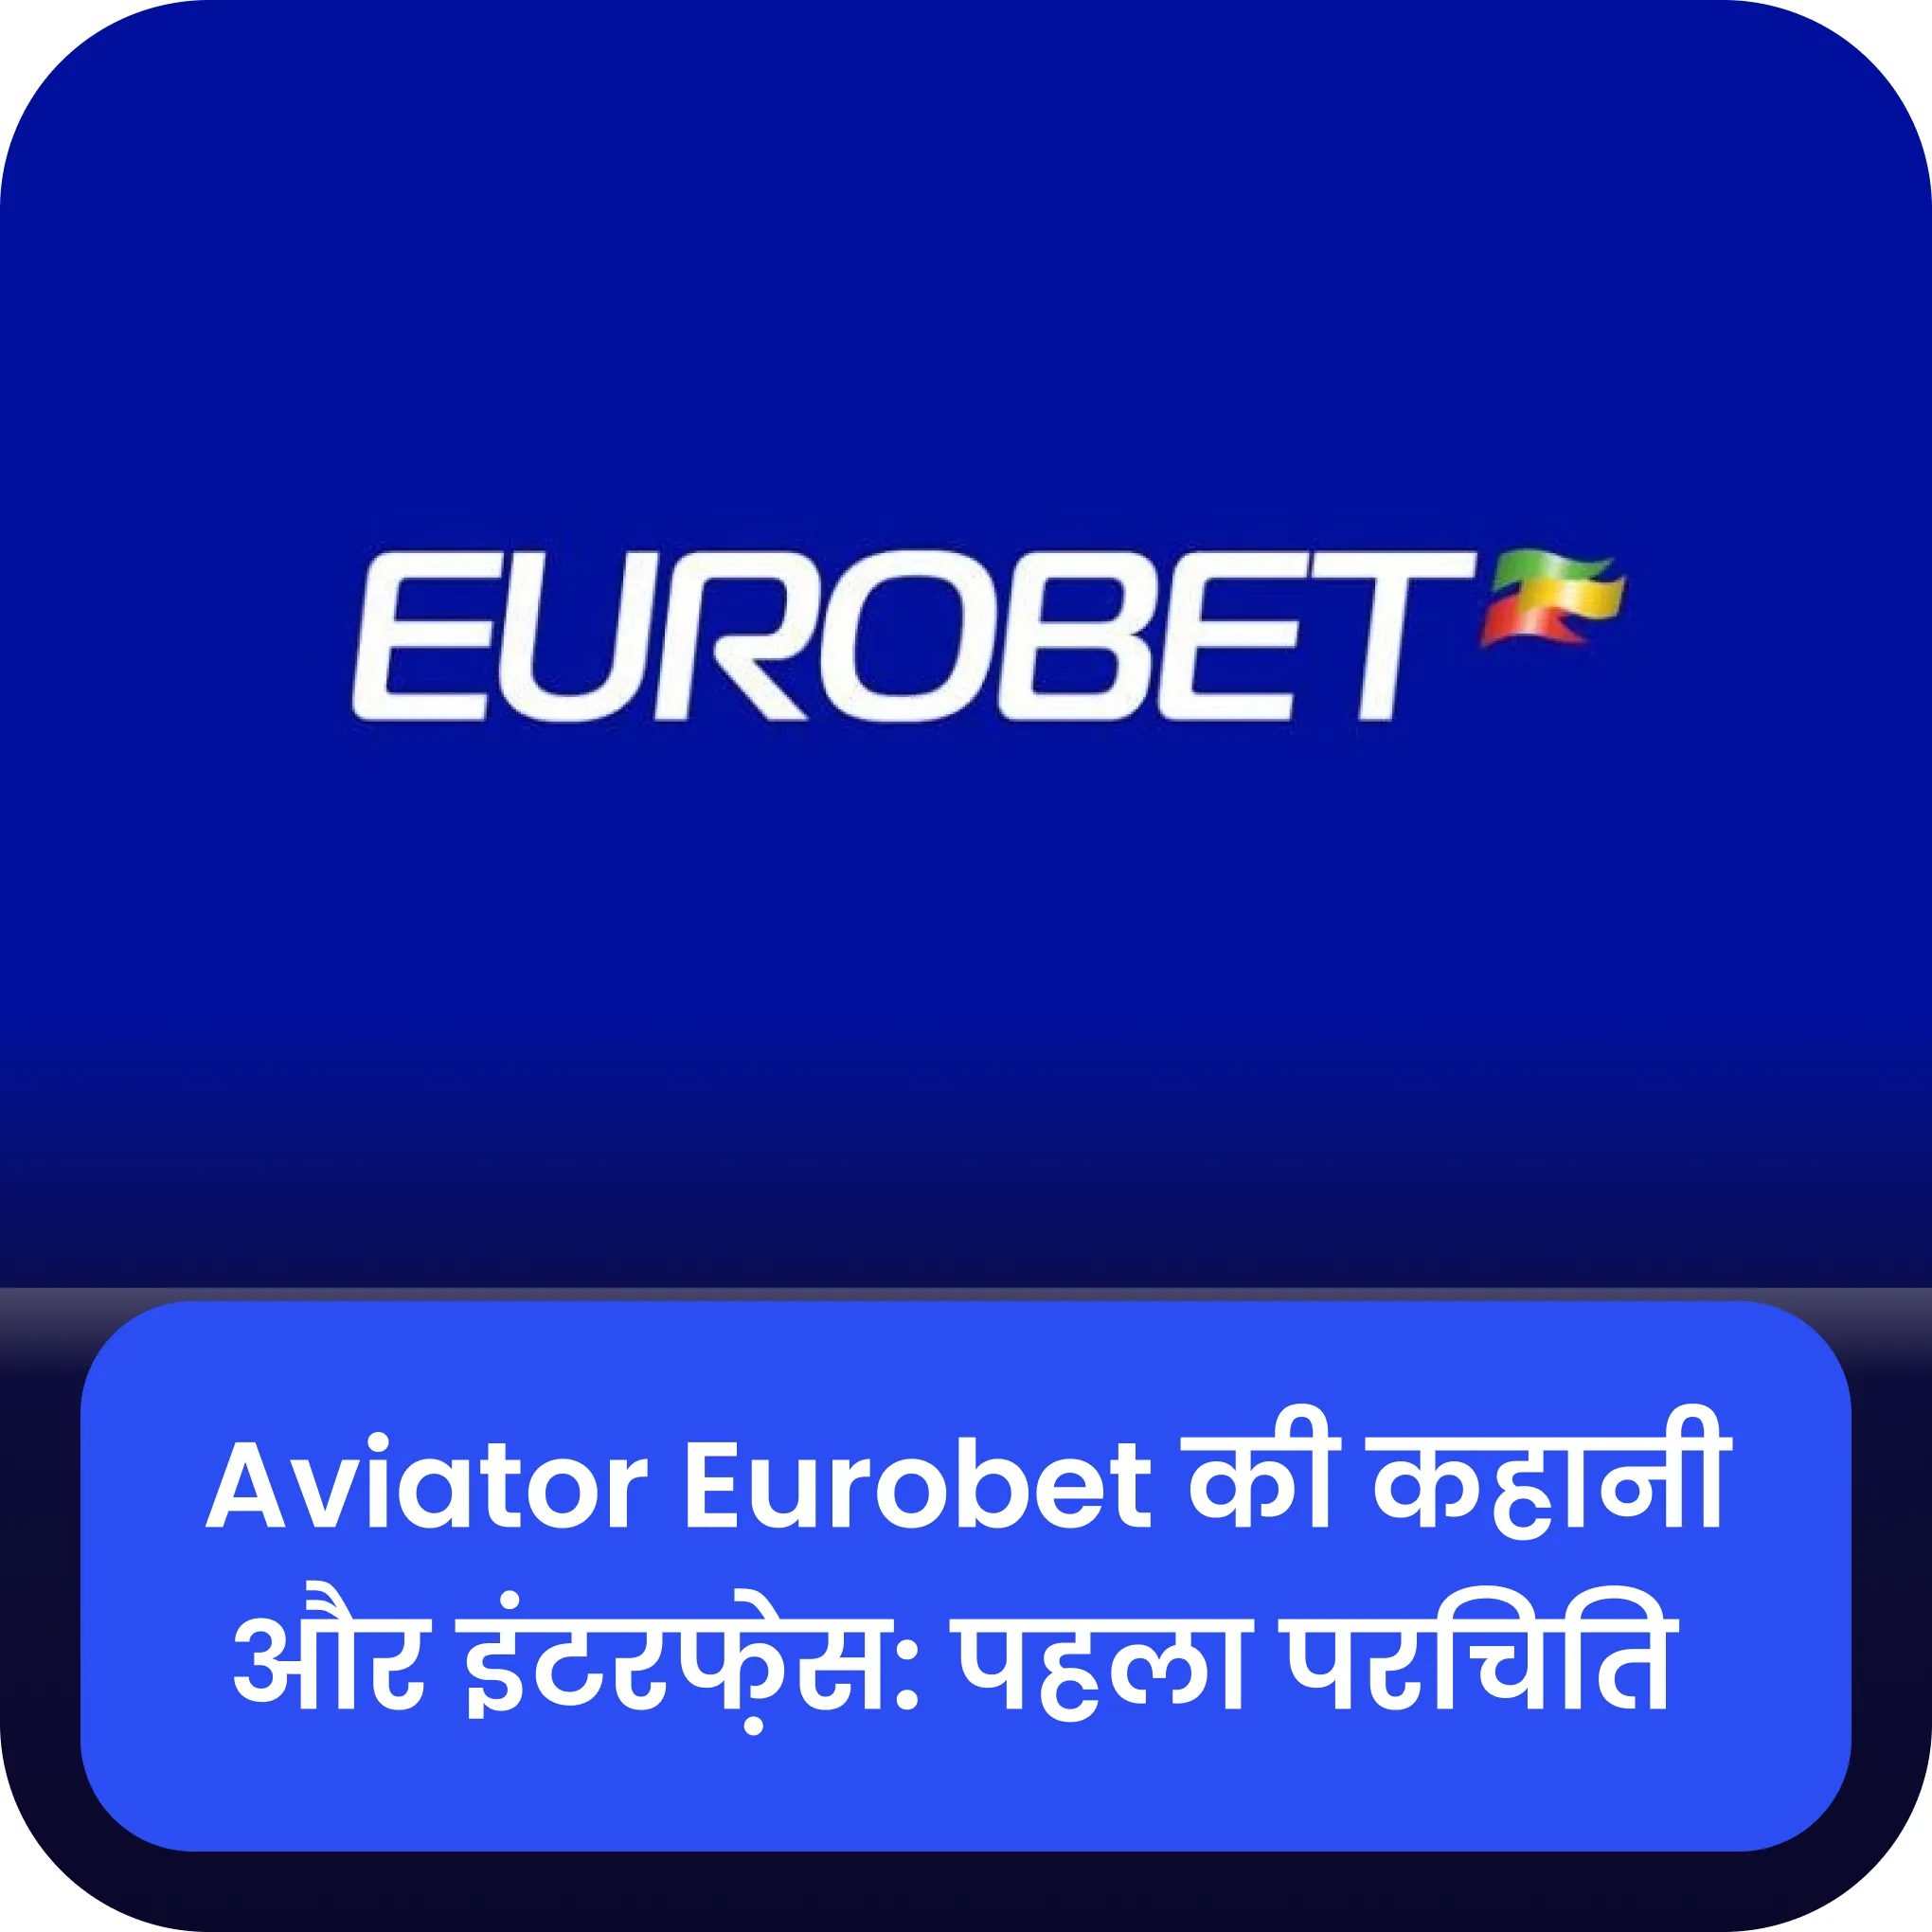 eurobet aviator कहानी